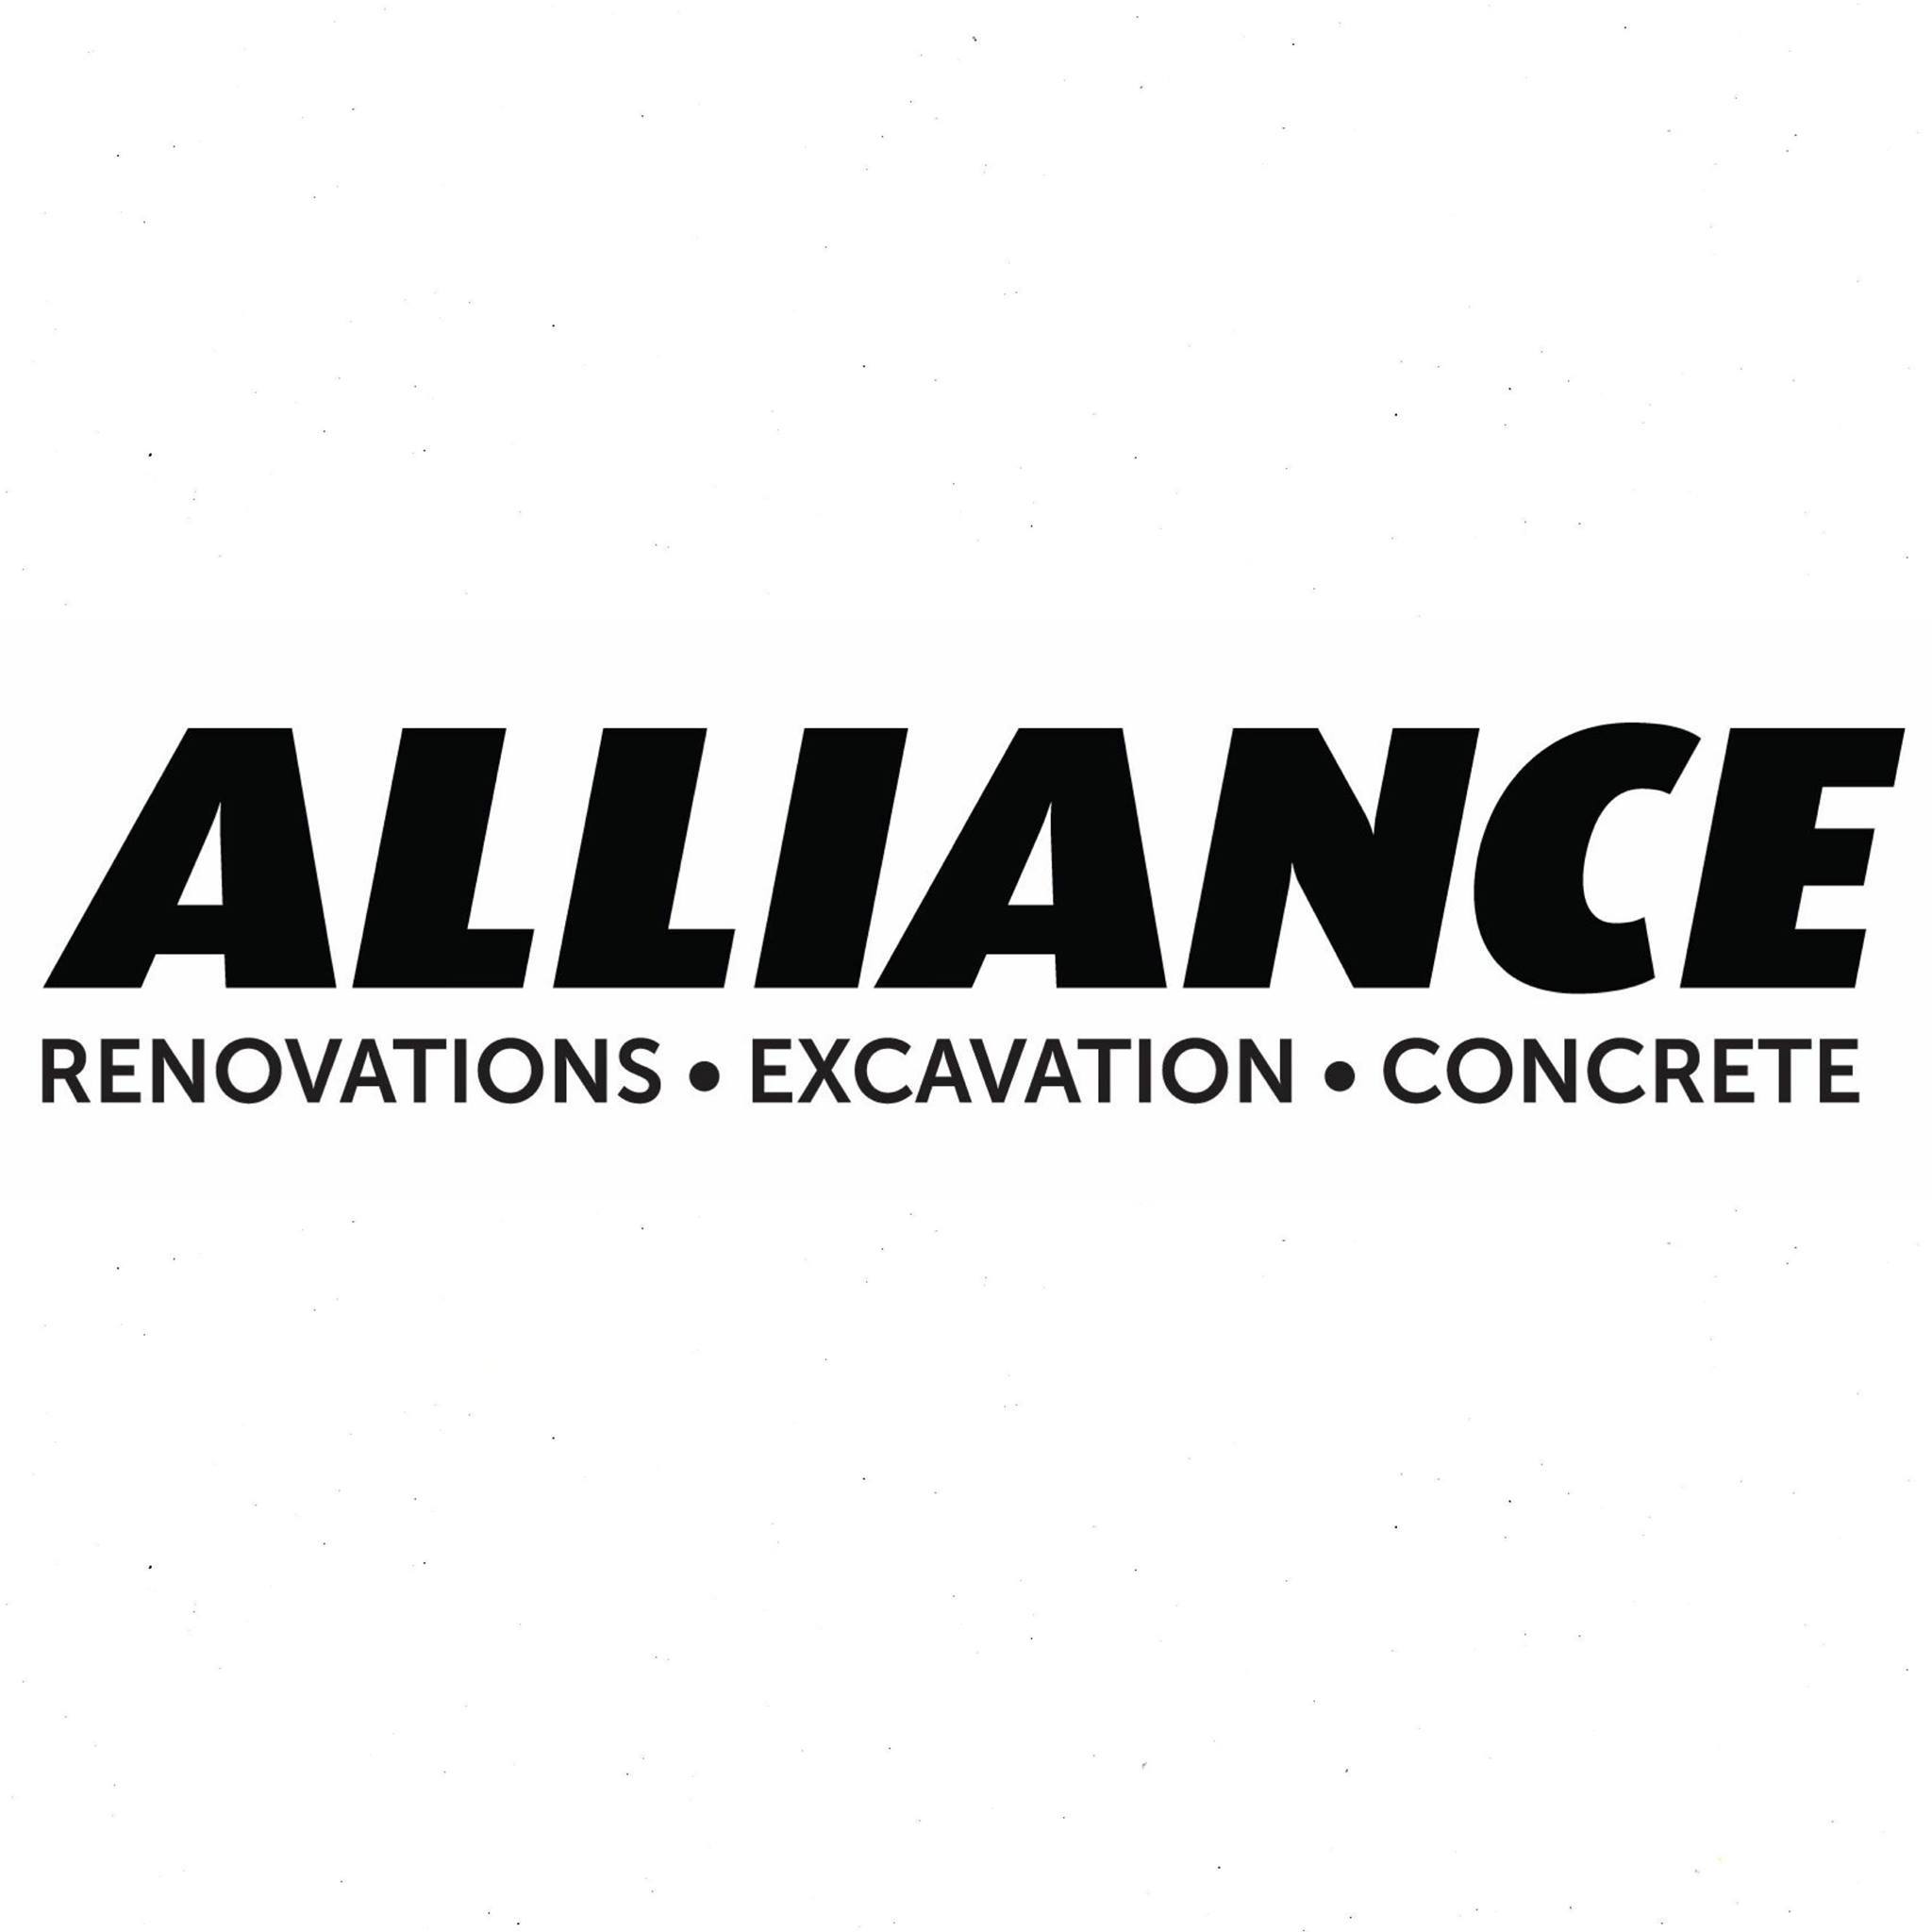 alliance-fb-image-logo.jpg